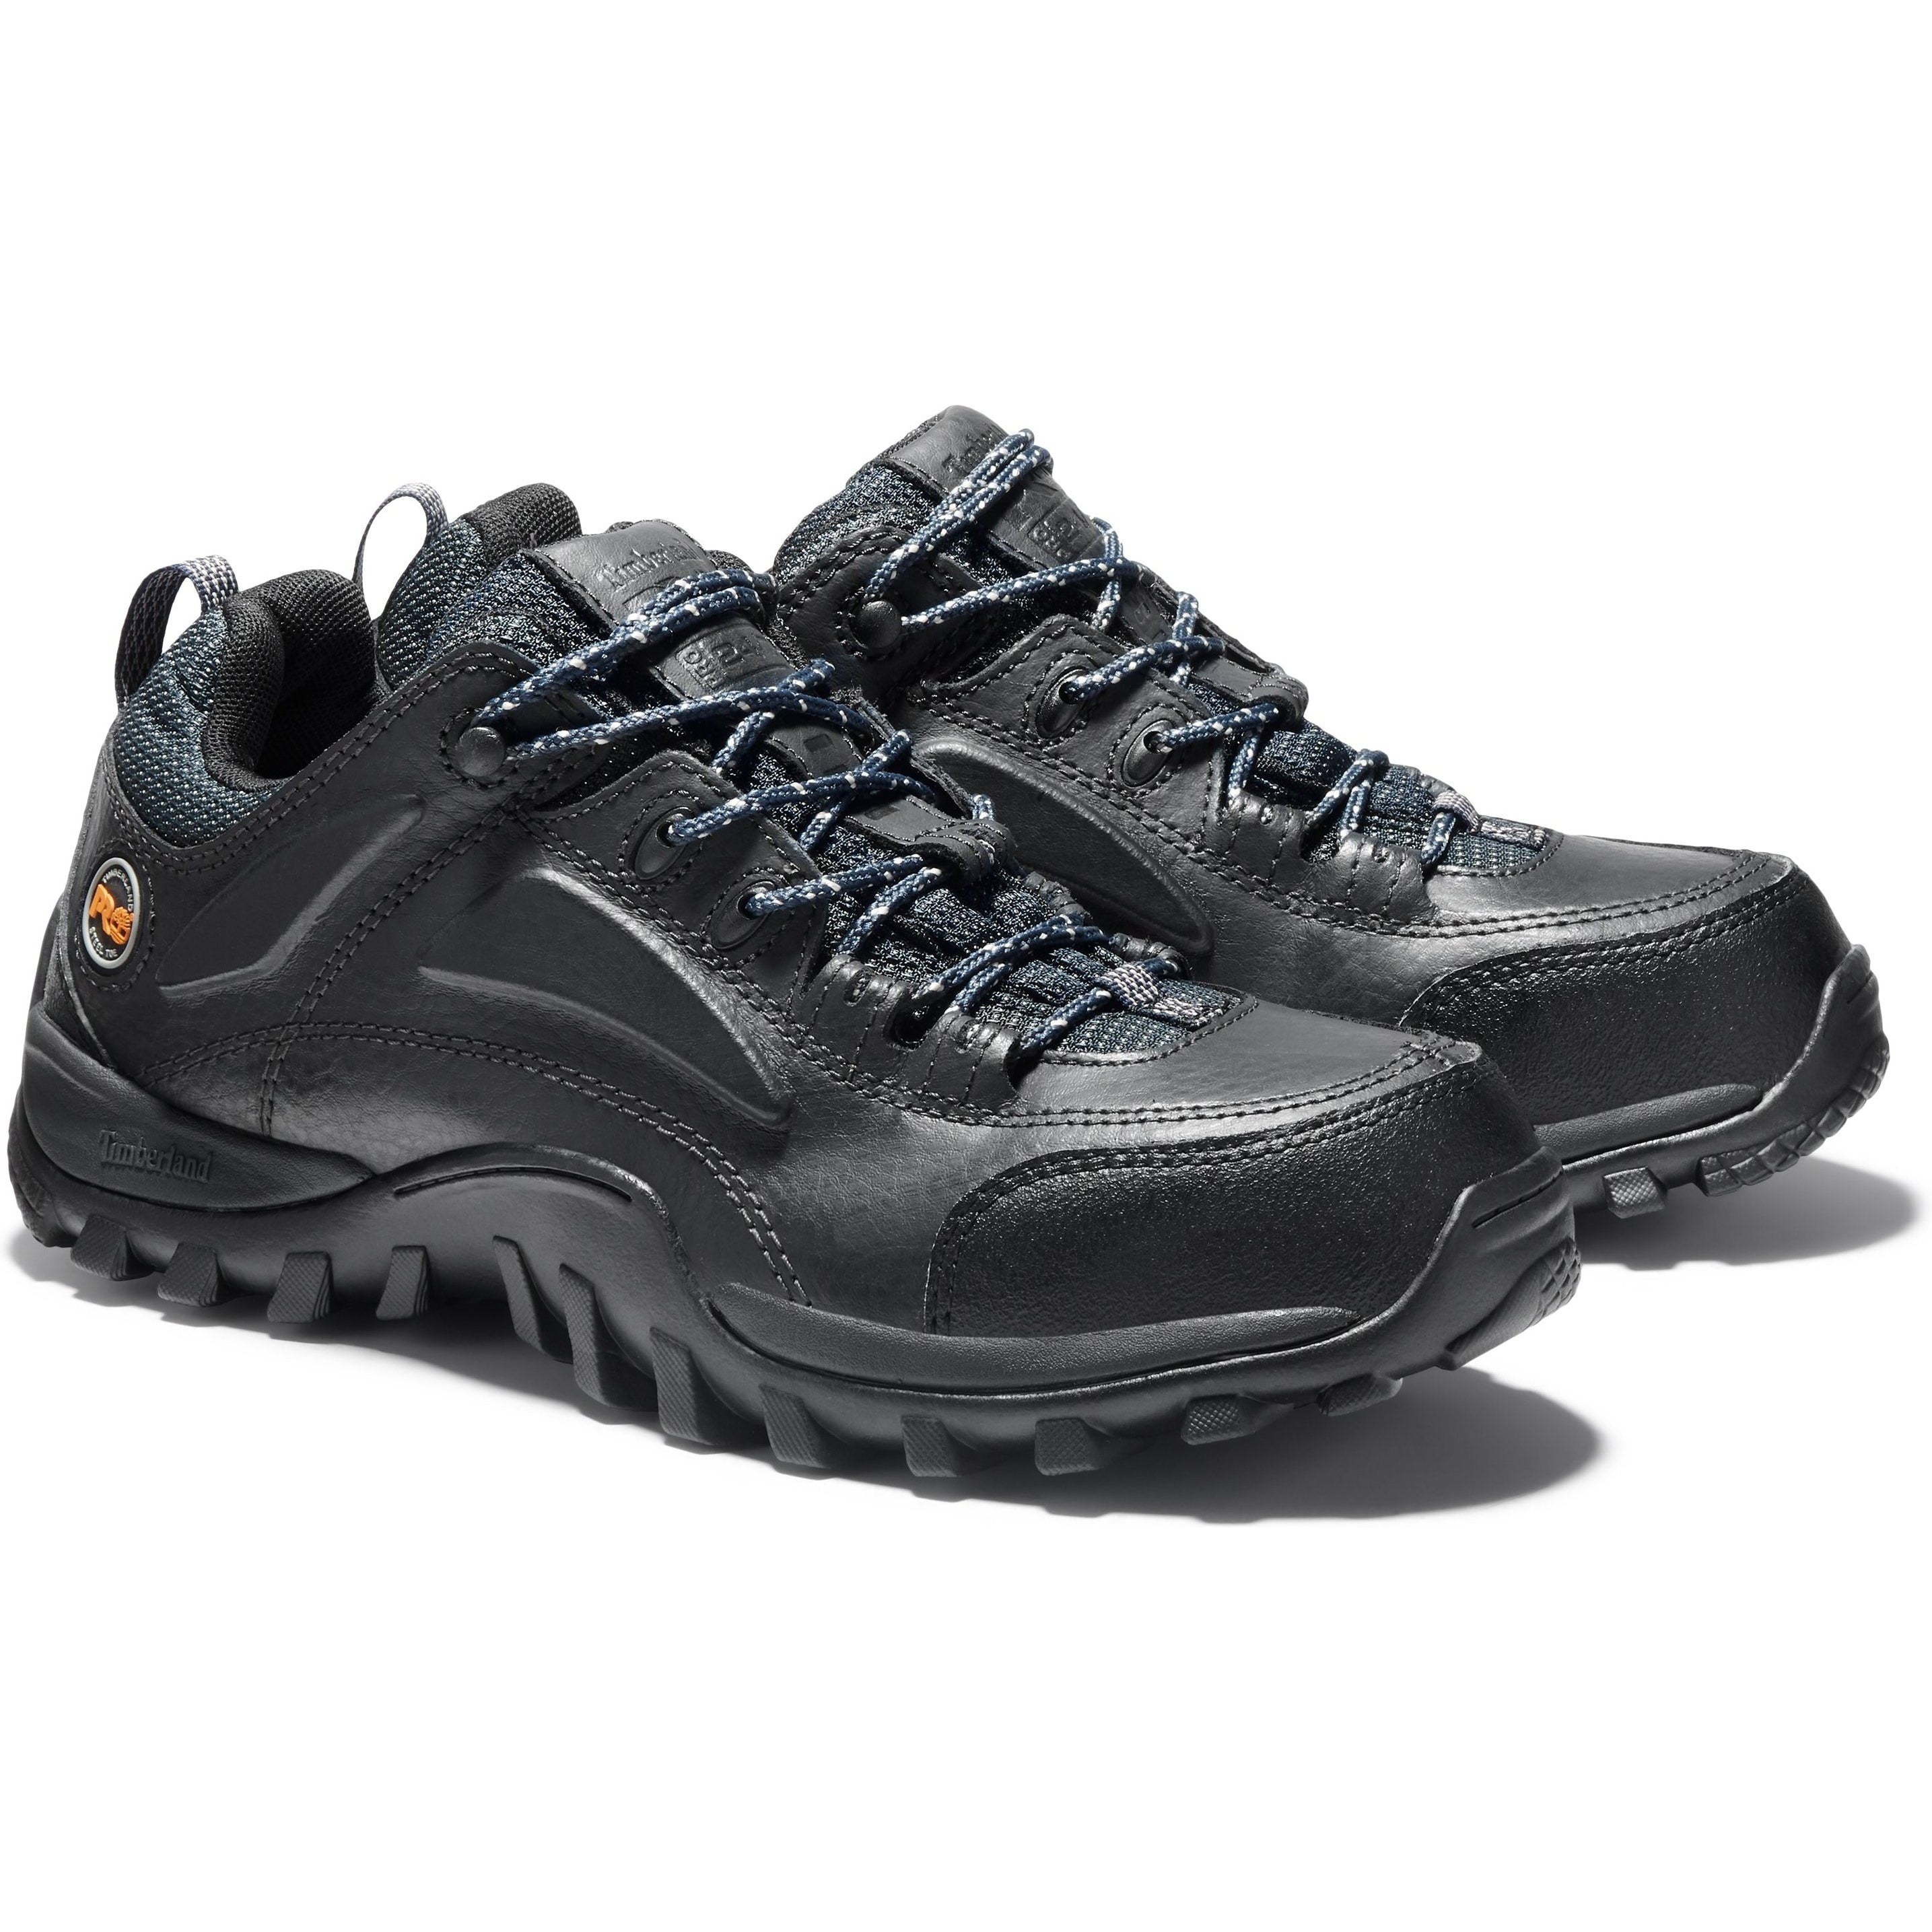 Timberland PRO Men's Mudsill Steel Toe Work Shoe - Black - TB140008001 7 / Medium / Black - Overlook Boots